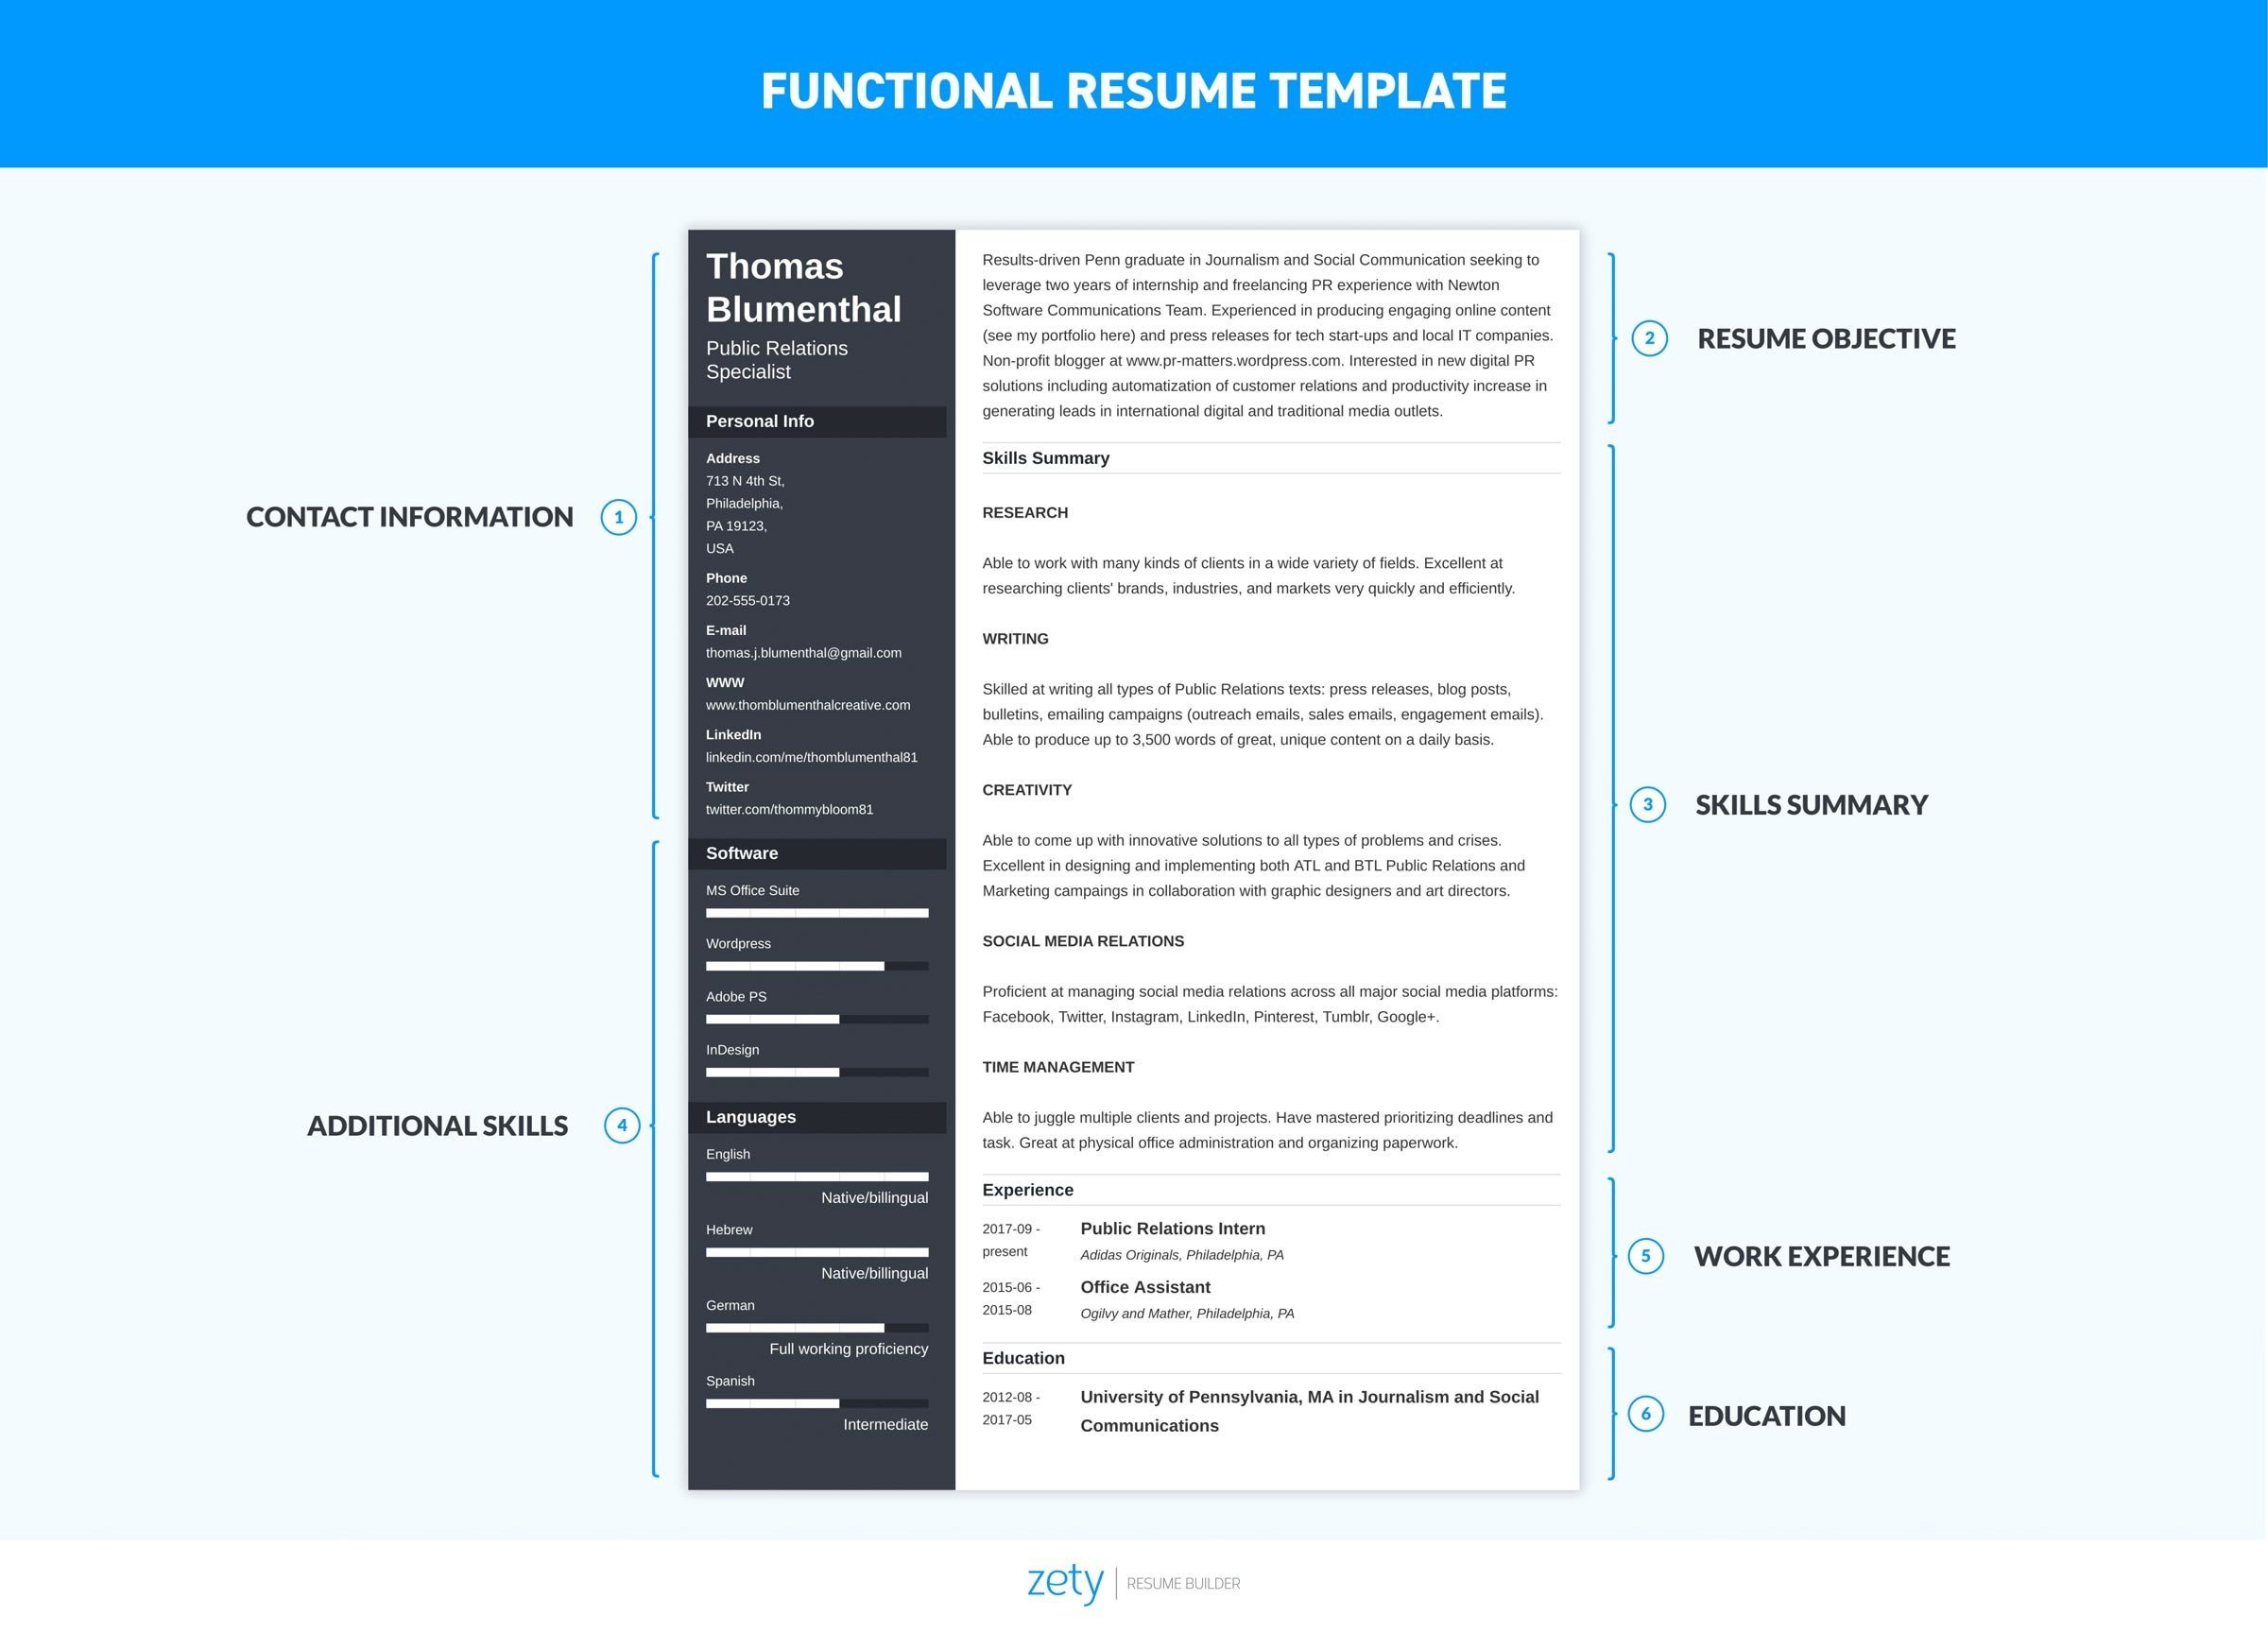 Sample Of Functional or Skills Based Resume Functional Resume: Examples & Skills Based Templates